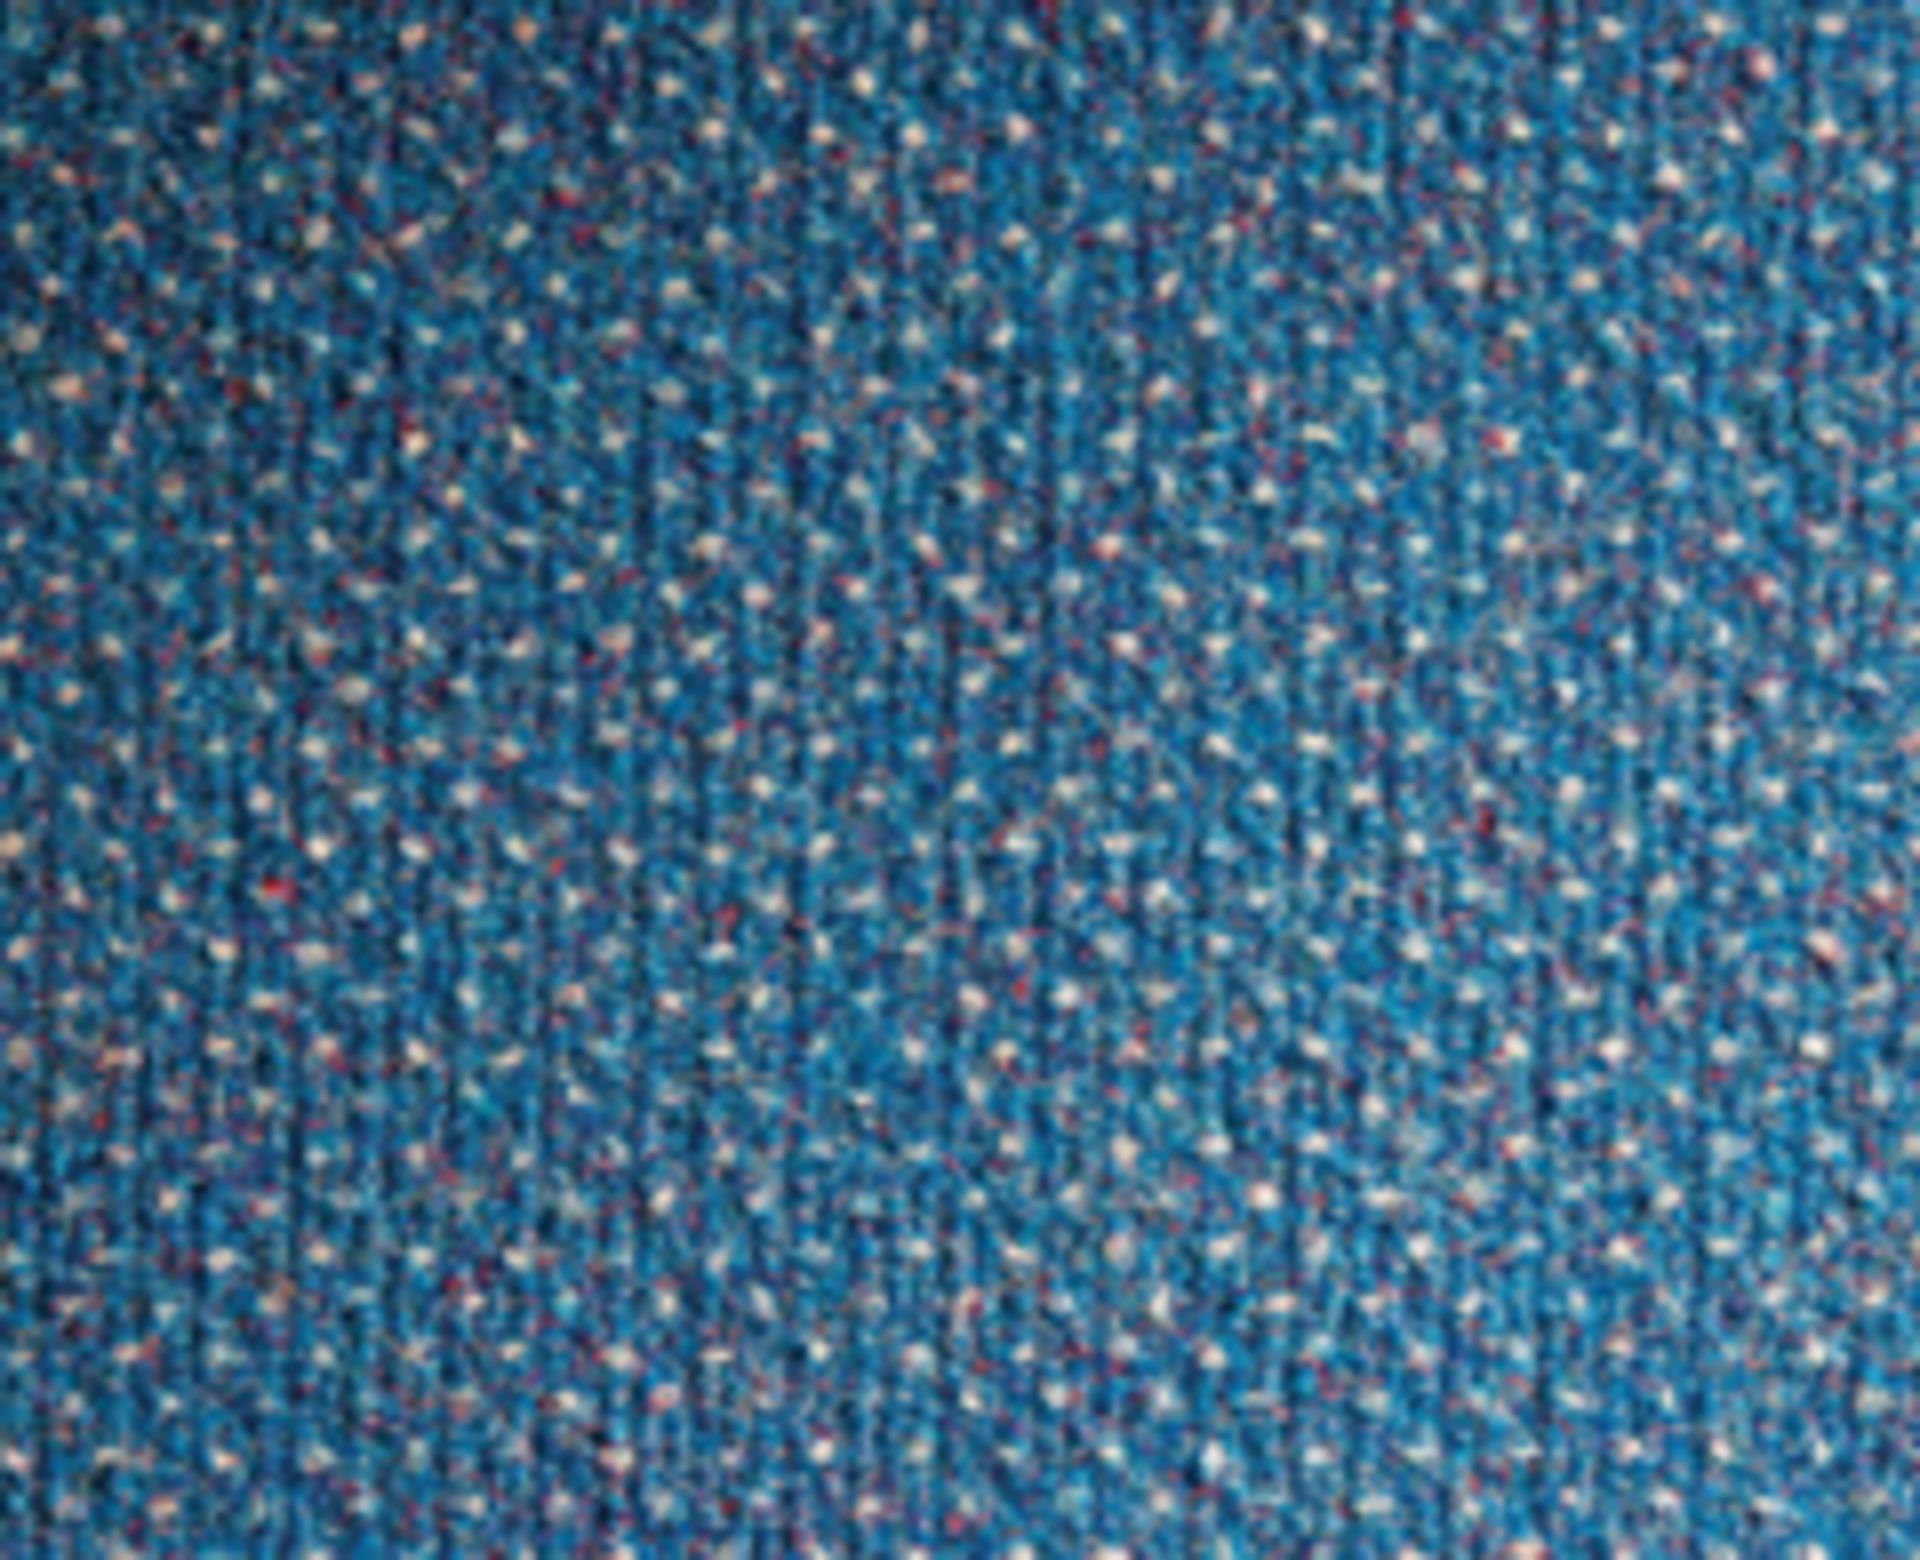 Montage (Heavy Duty Carpet) - Cobalt

Innovative Montage with its distinctive, random textured,